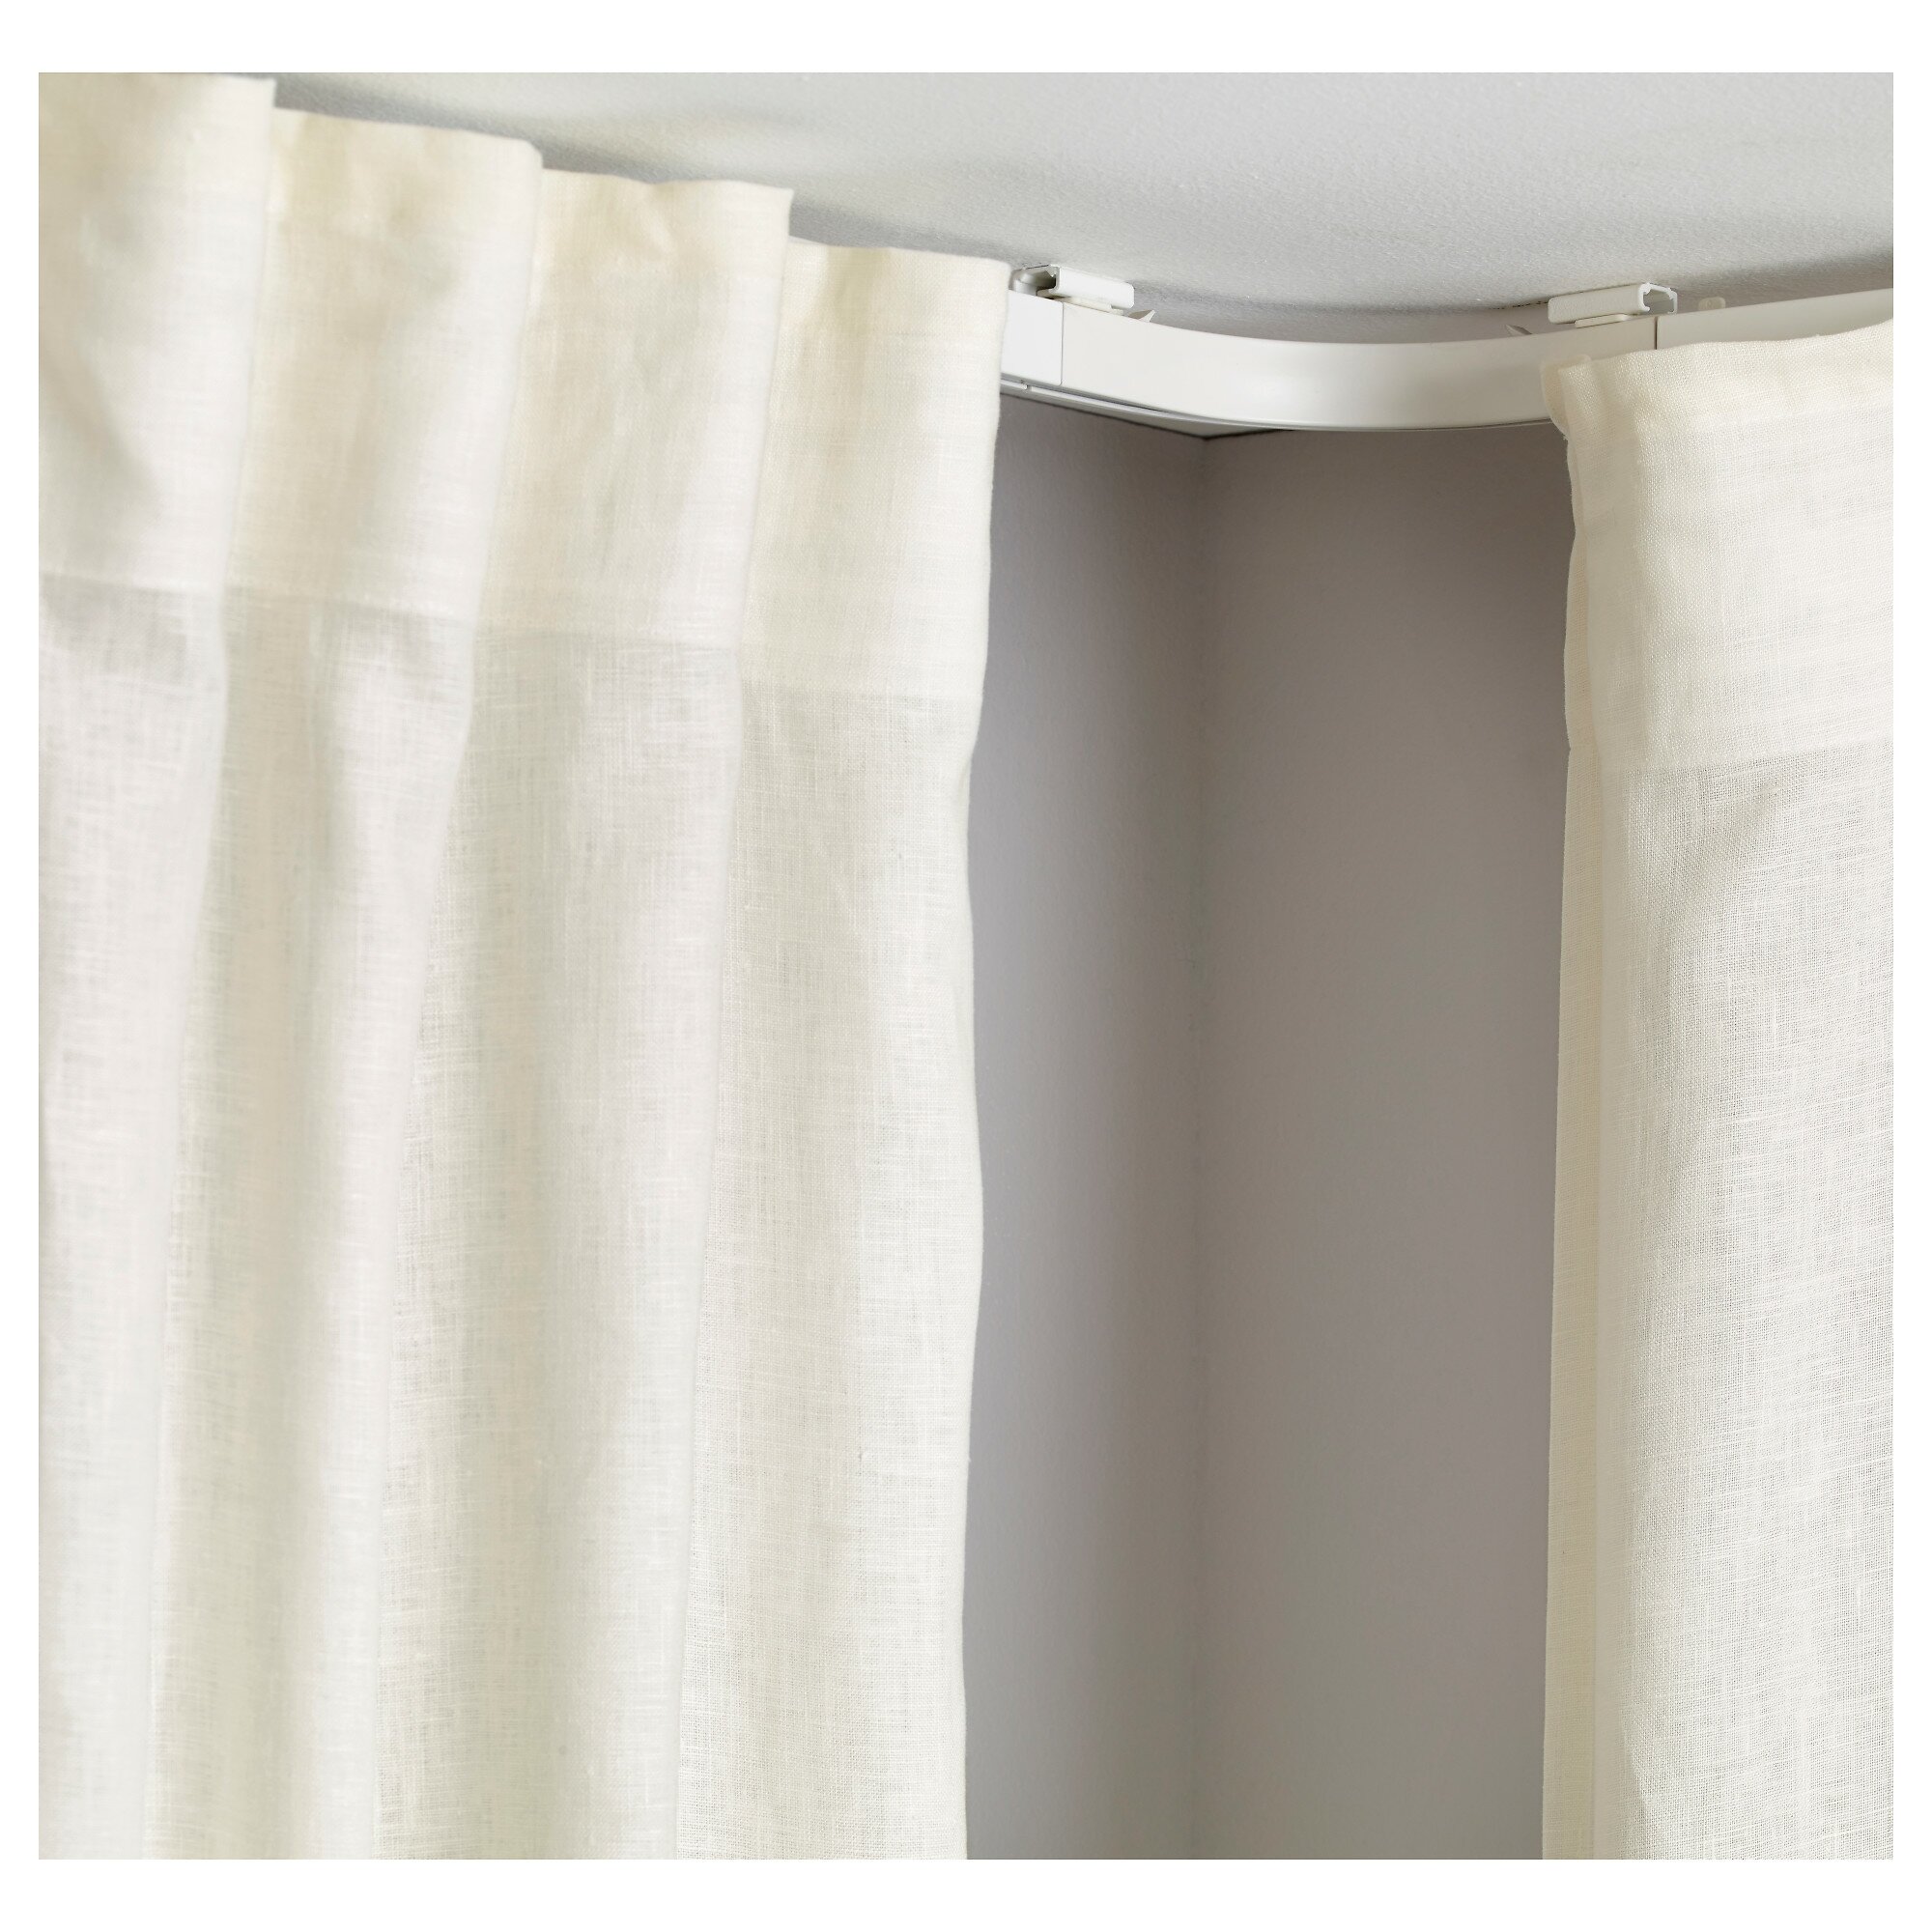 Ikea Shower Curtain for Best Your Bathroom Decoration: Sailboat Shower Curtain | Ikea Shower Curtain | Ikea Shower Pole